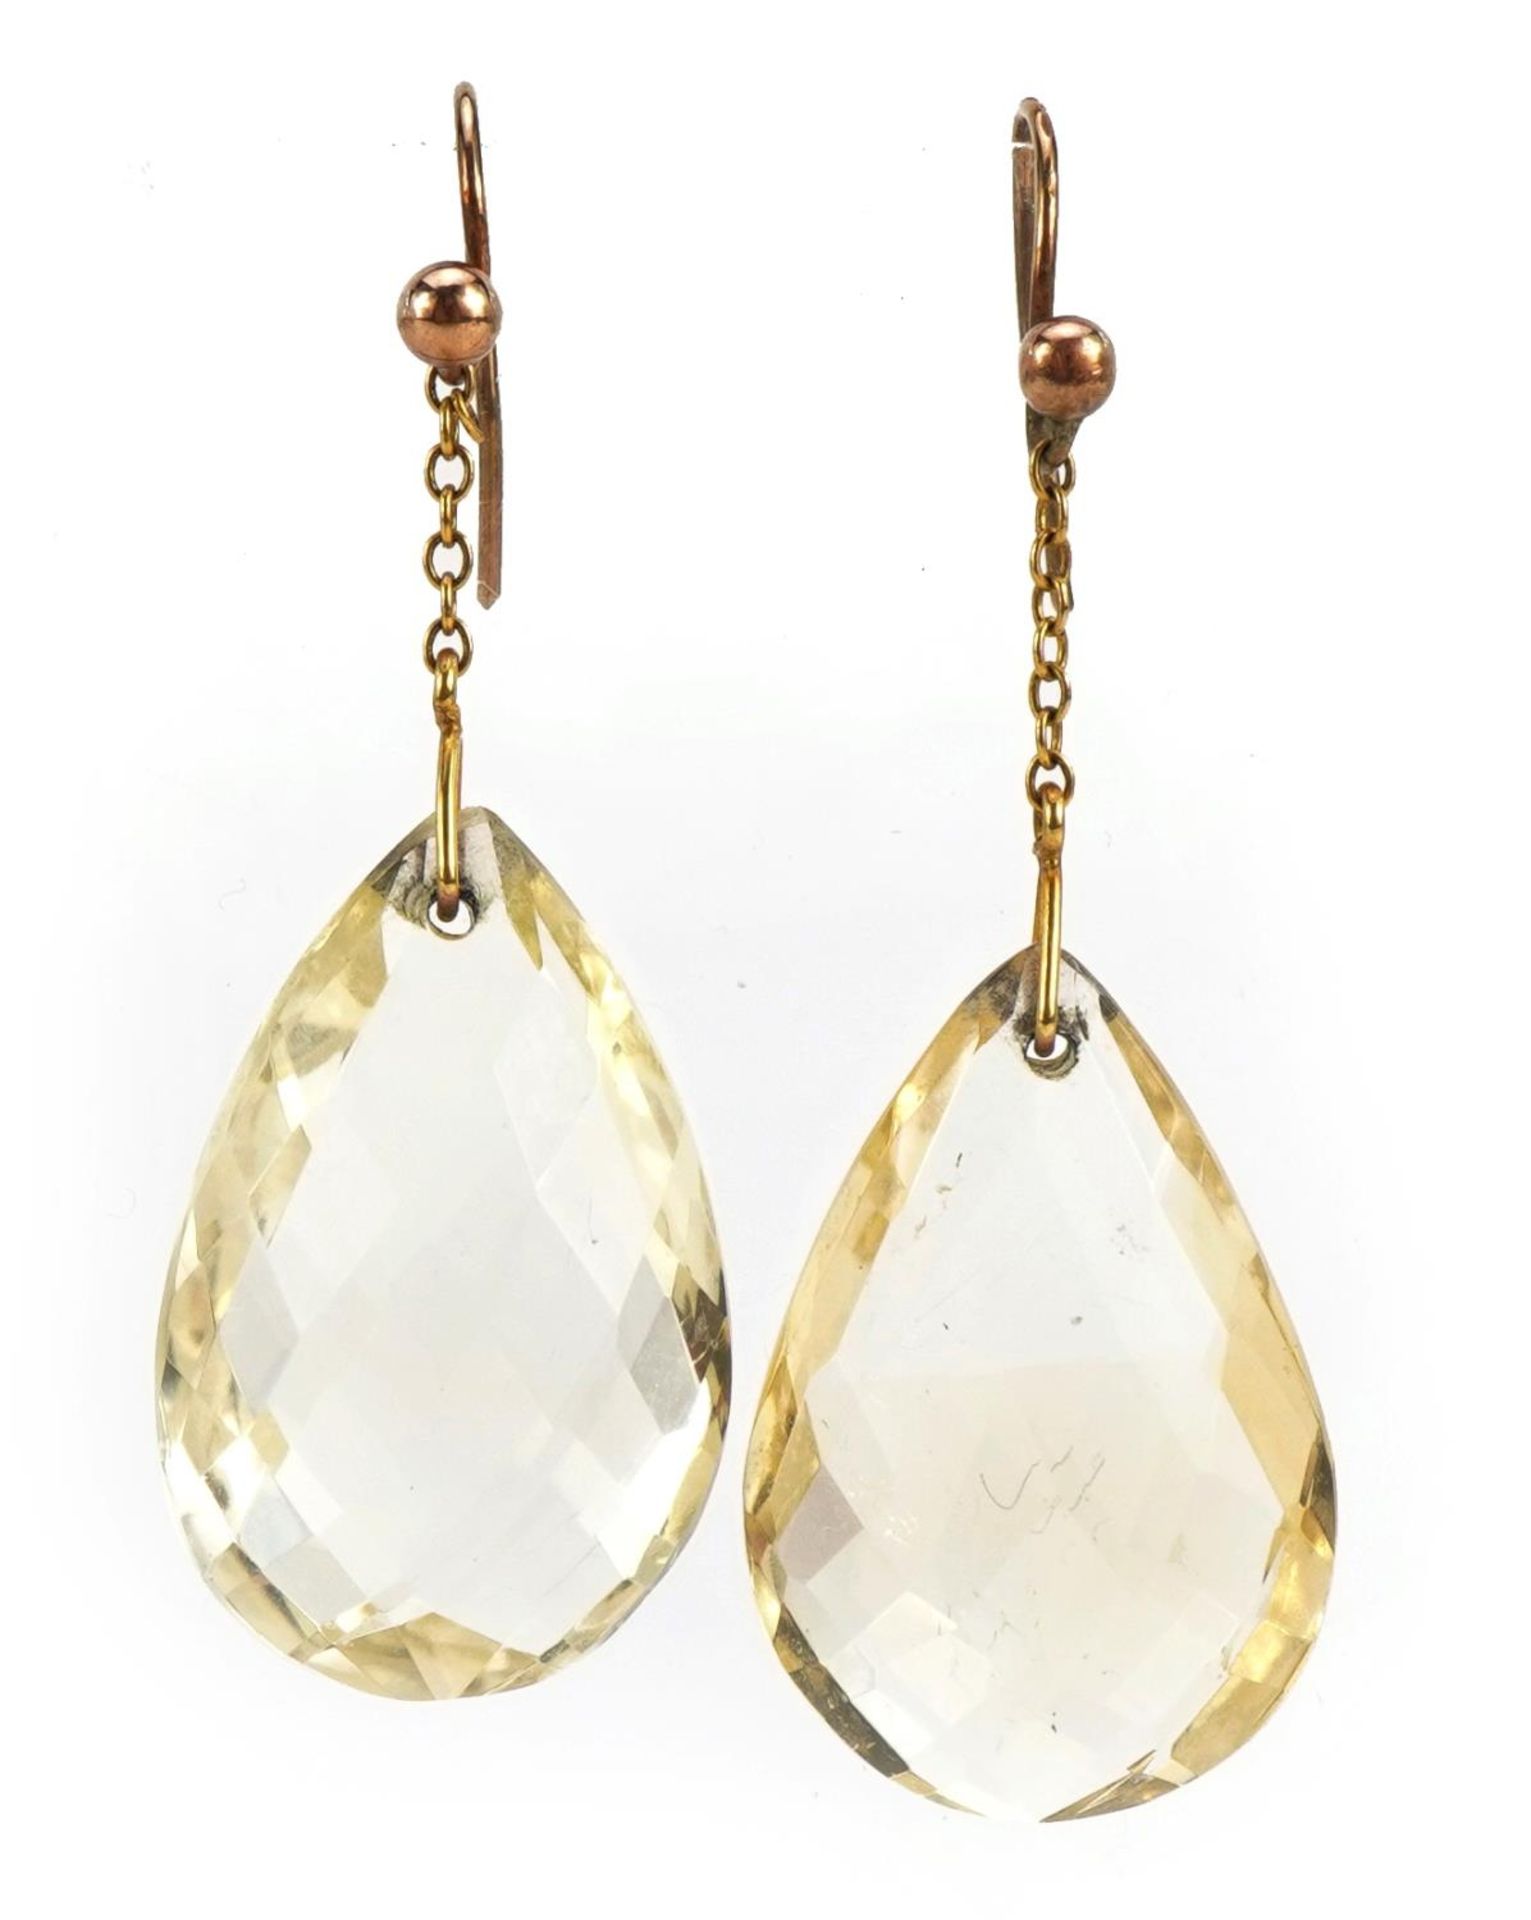 Pair of citrine teardrop earrings with yellow metal mounts, 4cm high, 6.2g